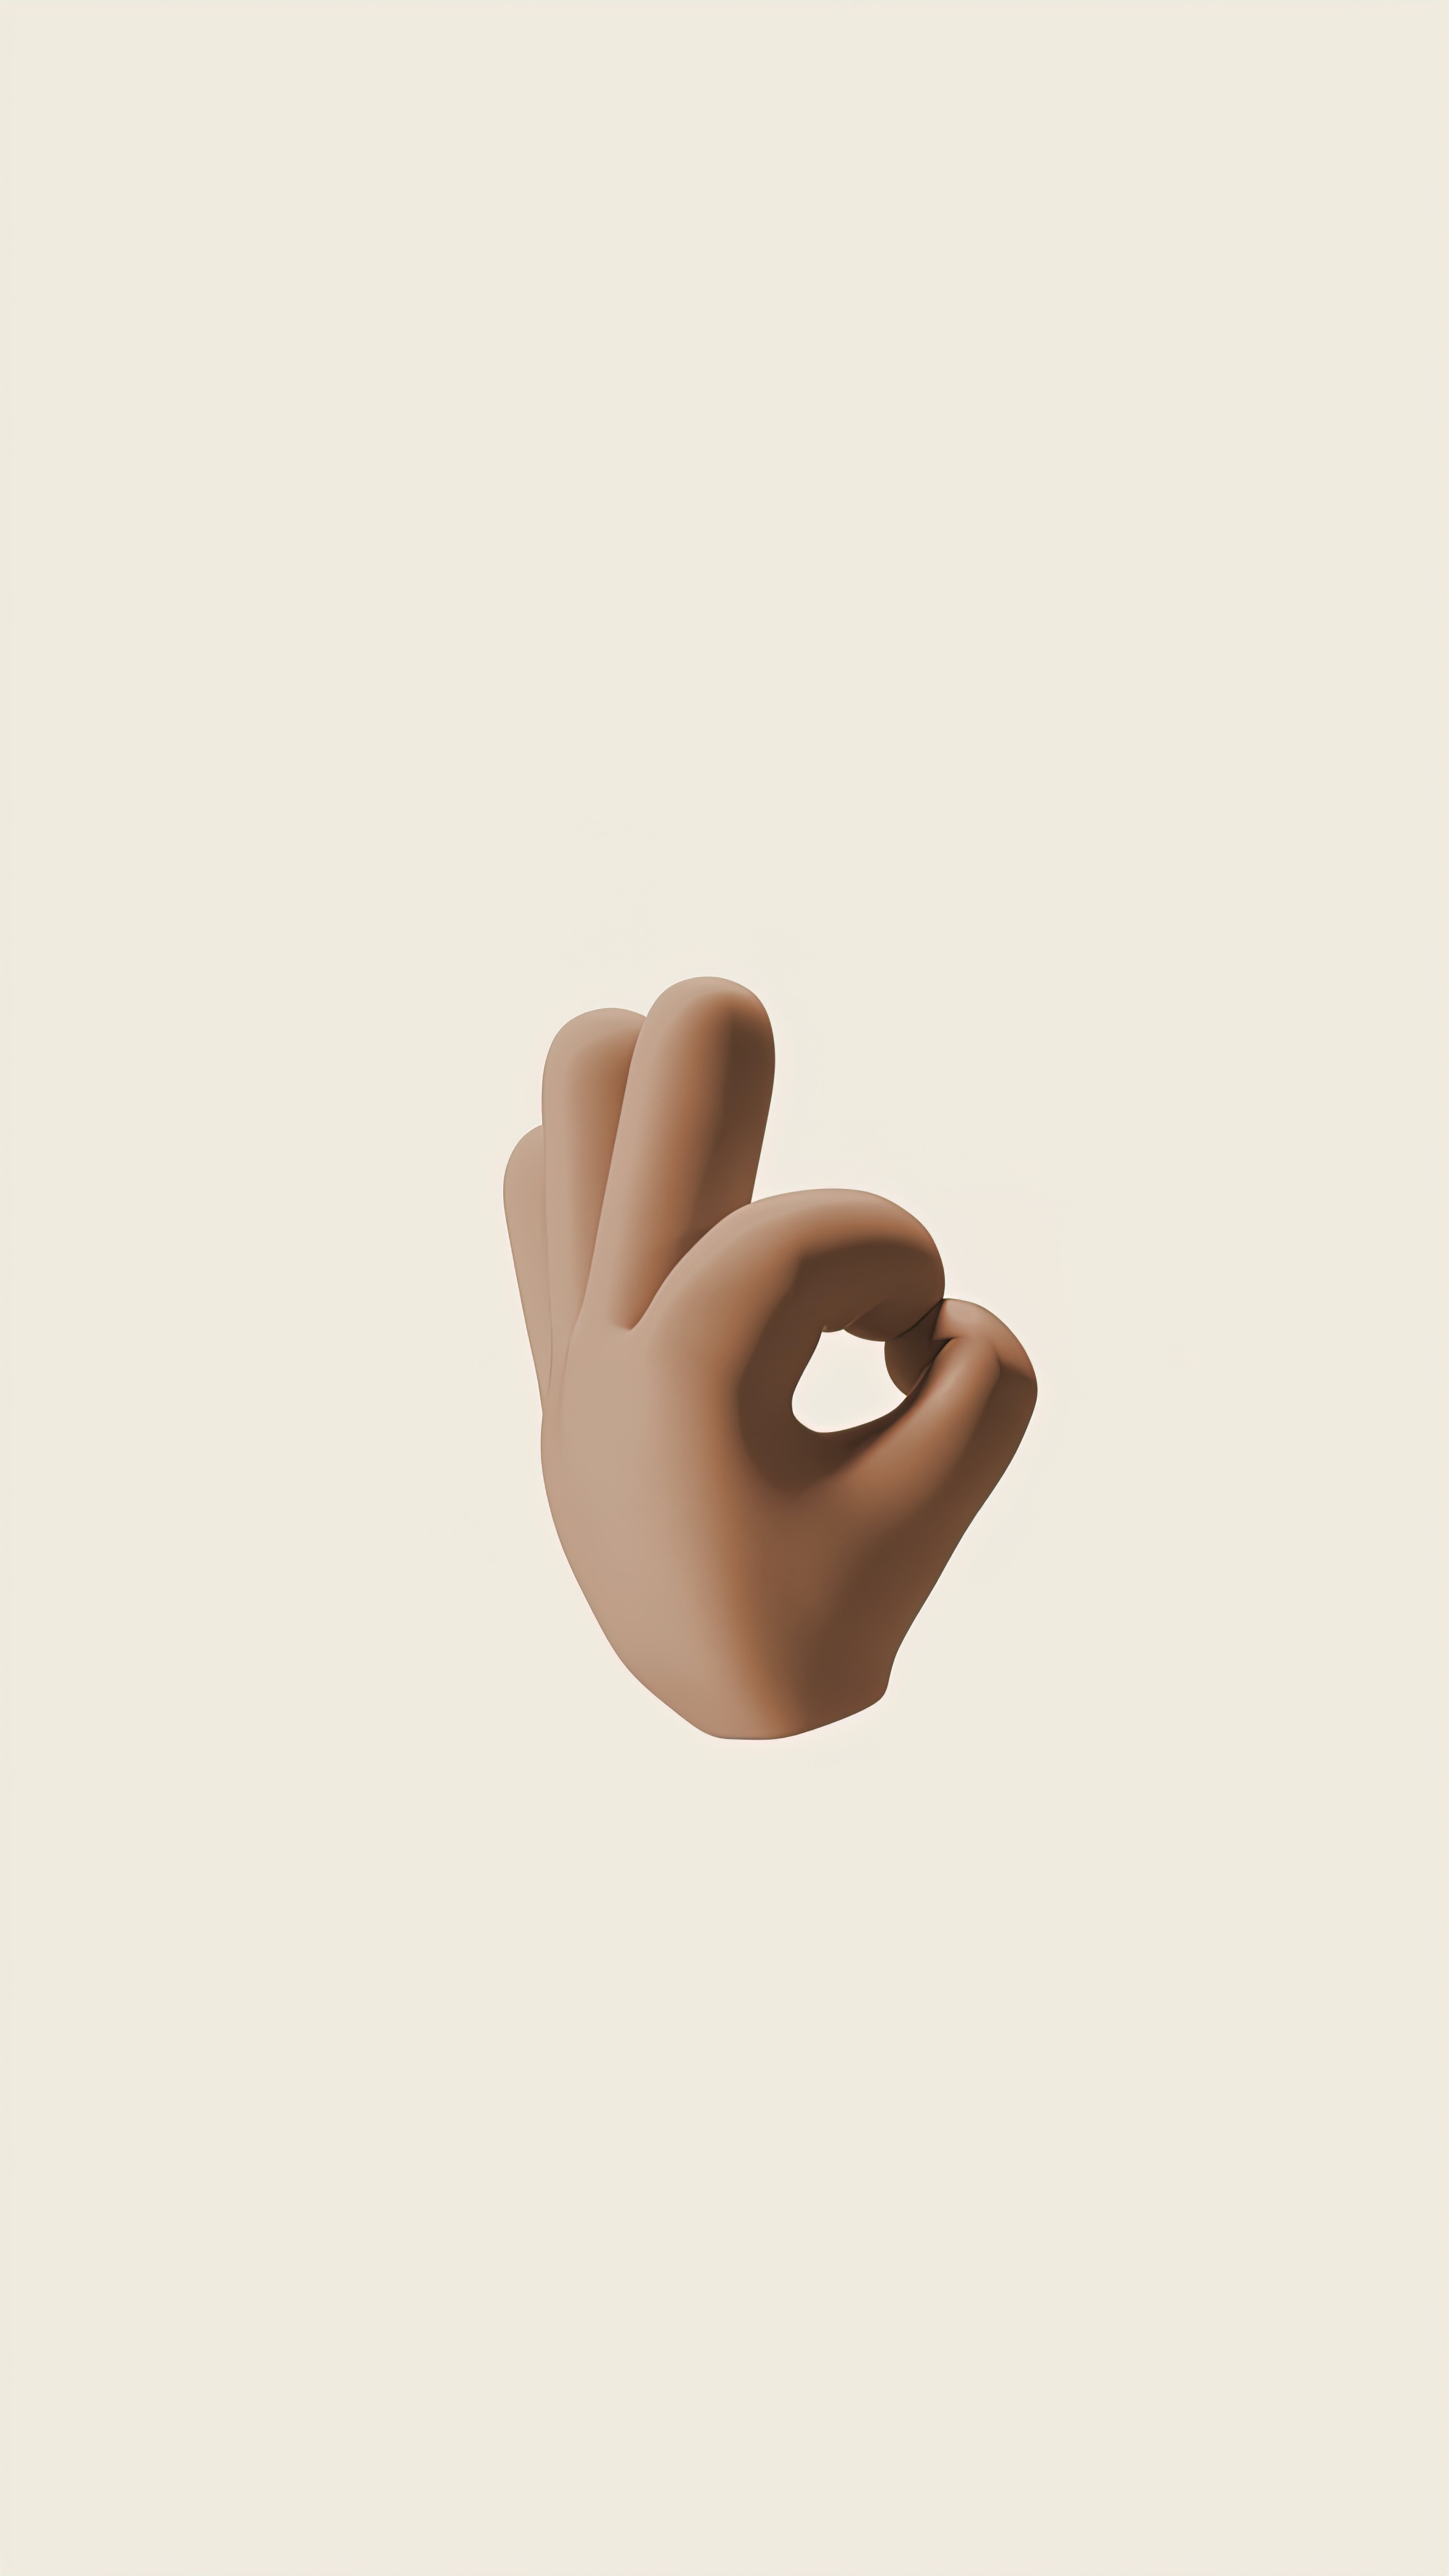 An Animation of Emoji Hand · Free